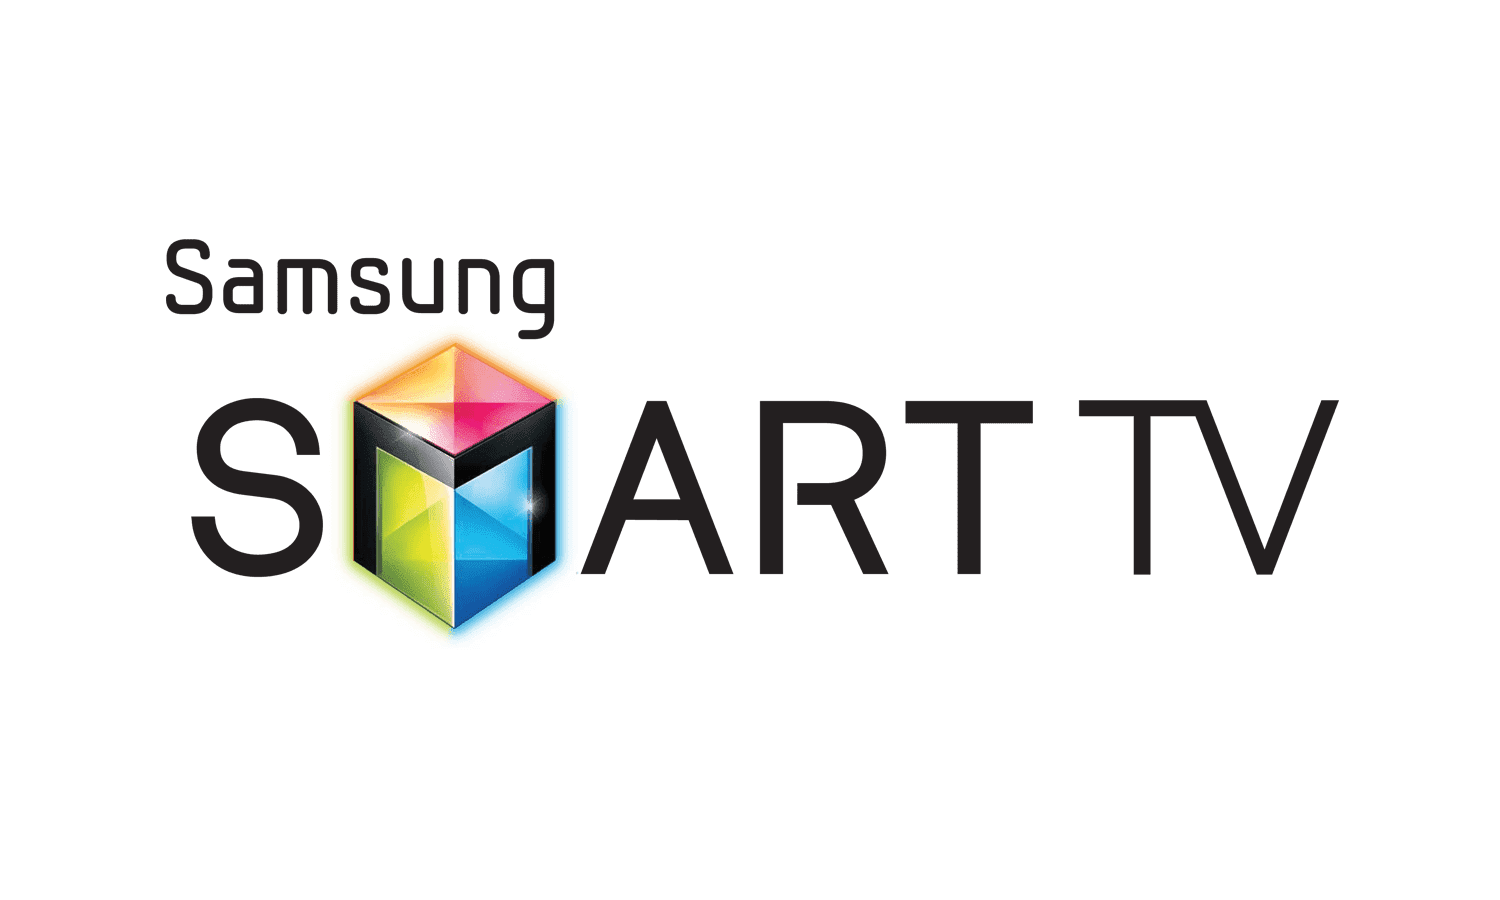 Samsung Smart TV 